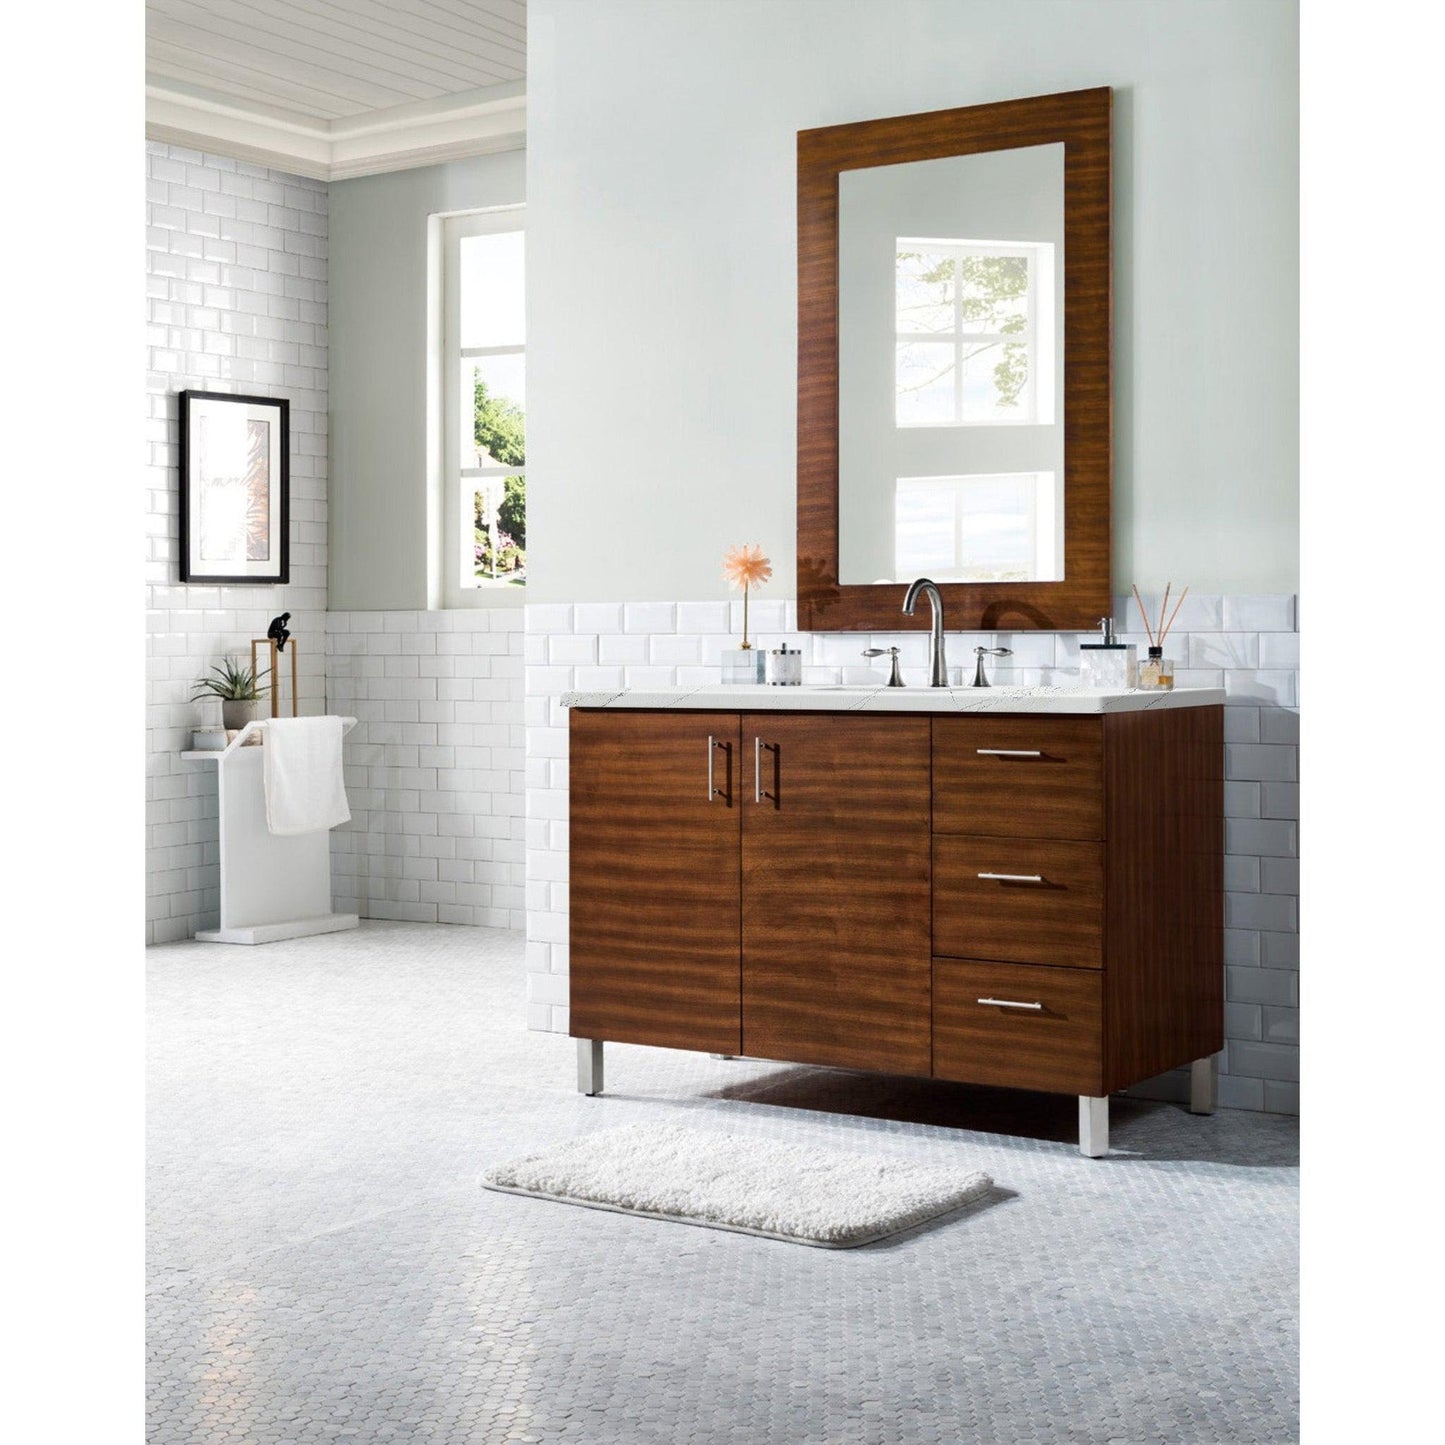 James Martin Metropolitan 48" Single American Walnut Bathroom Vanity With 1" Ethereal Noctis Quartz Top and Rectangular Ceramic Sink